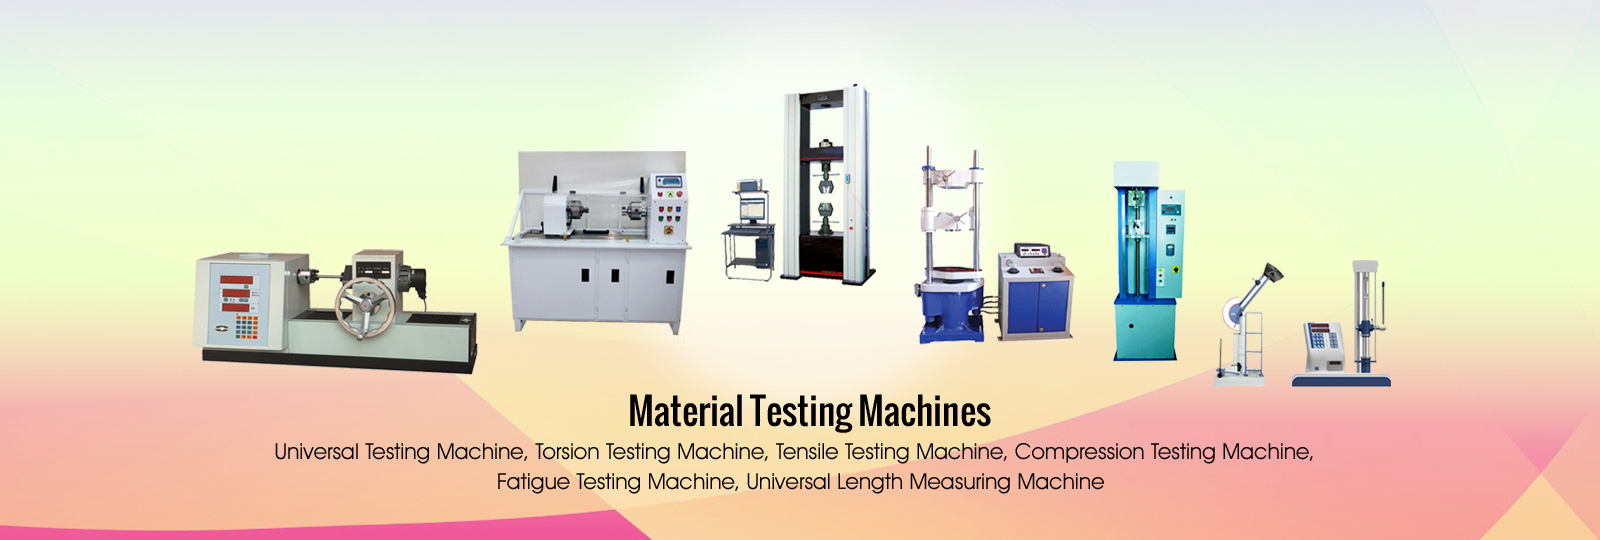 Material Testing Machines